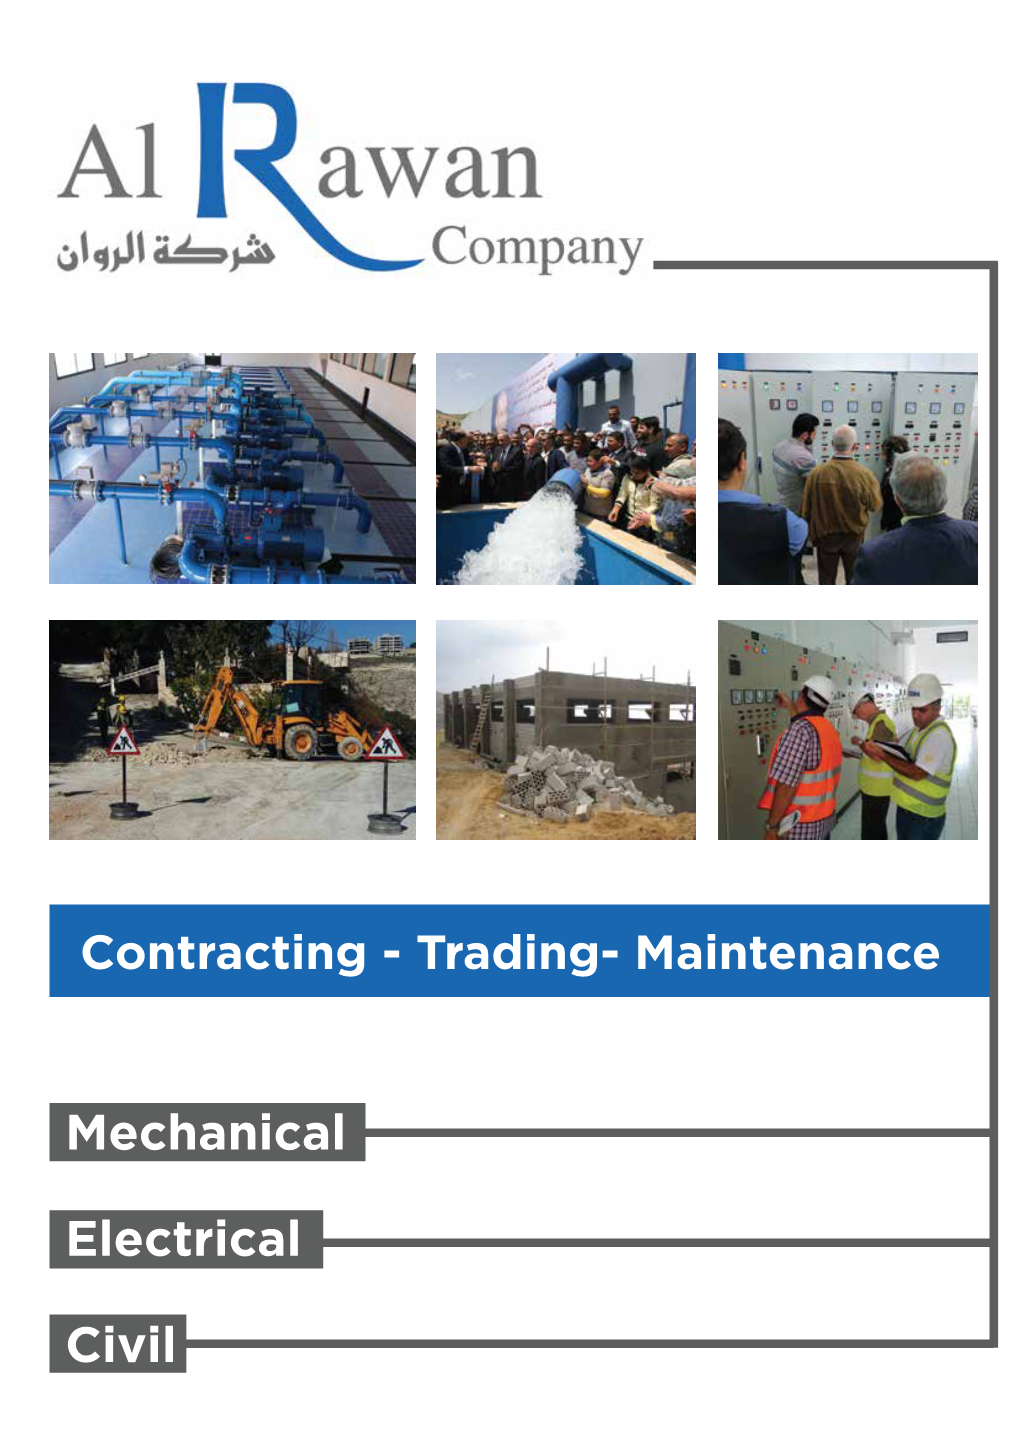 Al Rawan Company Profile